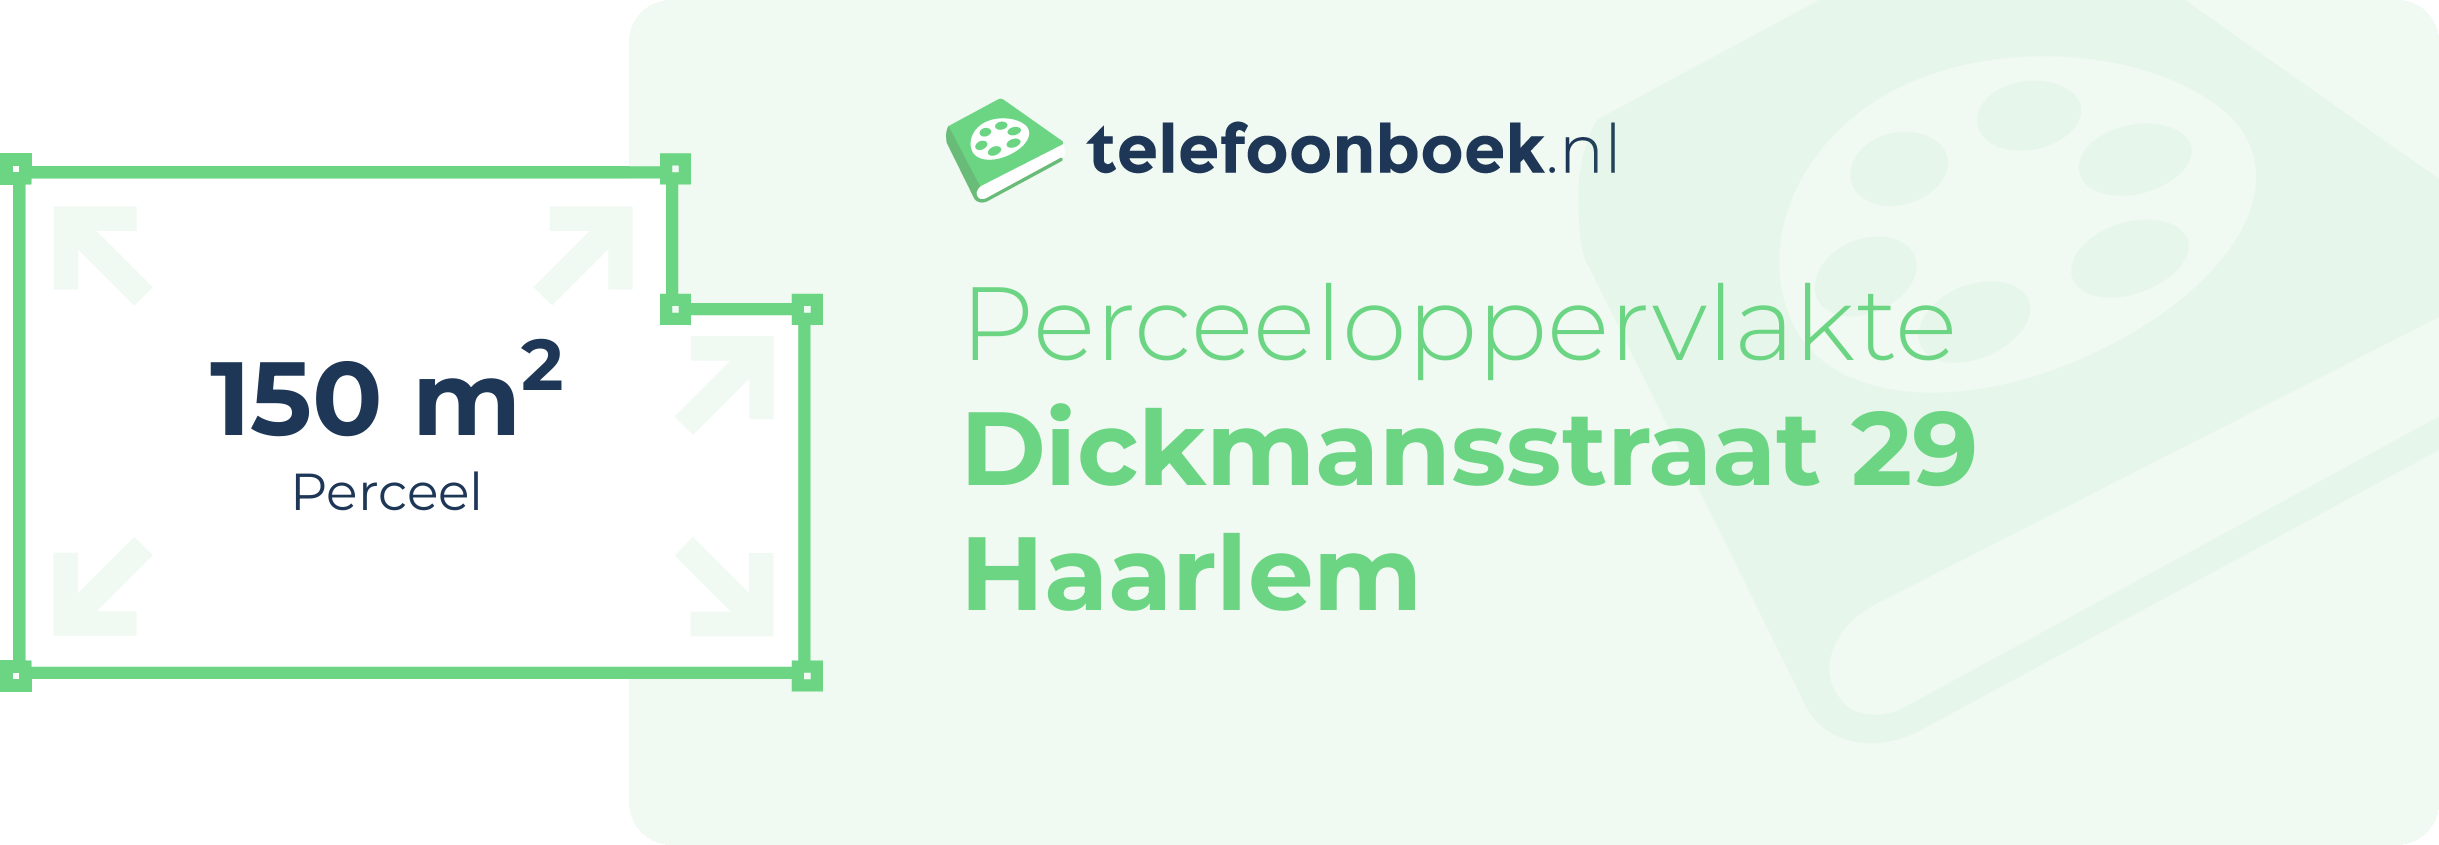 Perceeloppervlakte Dickmansstraat 29 Haarlem